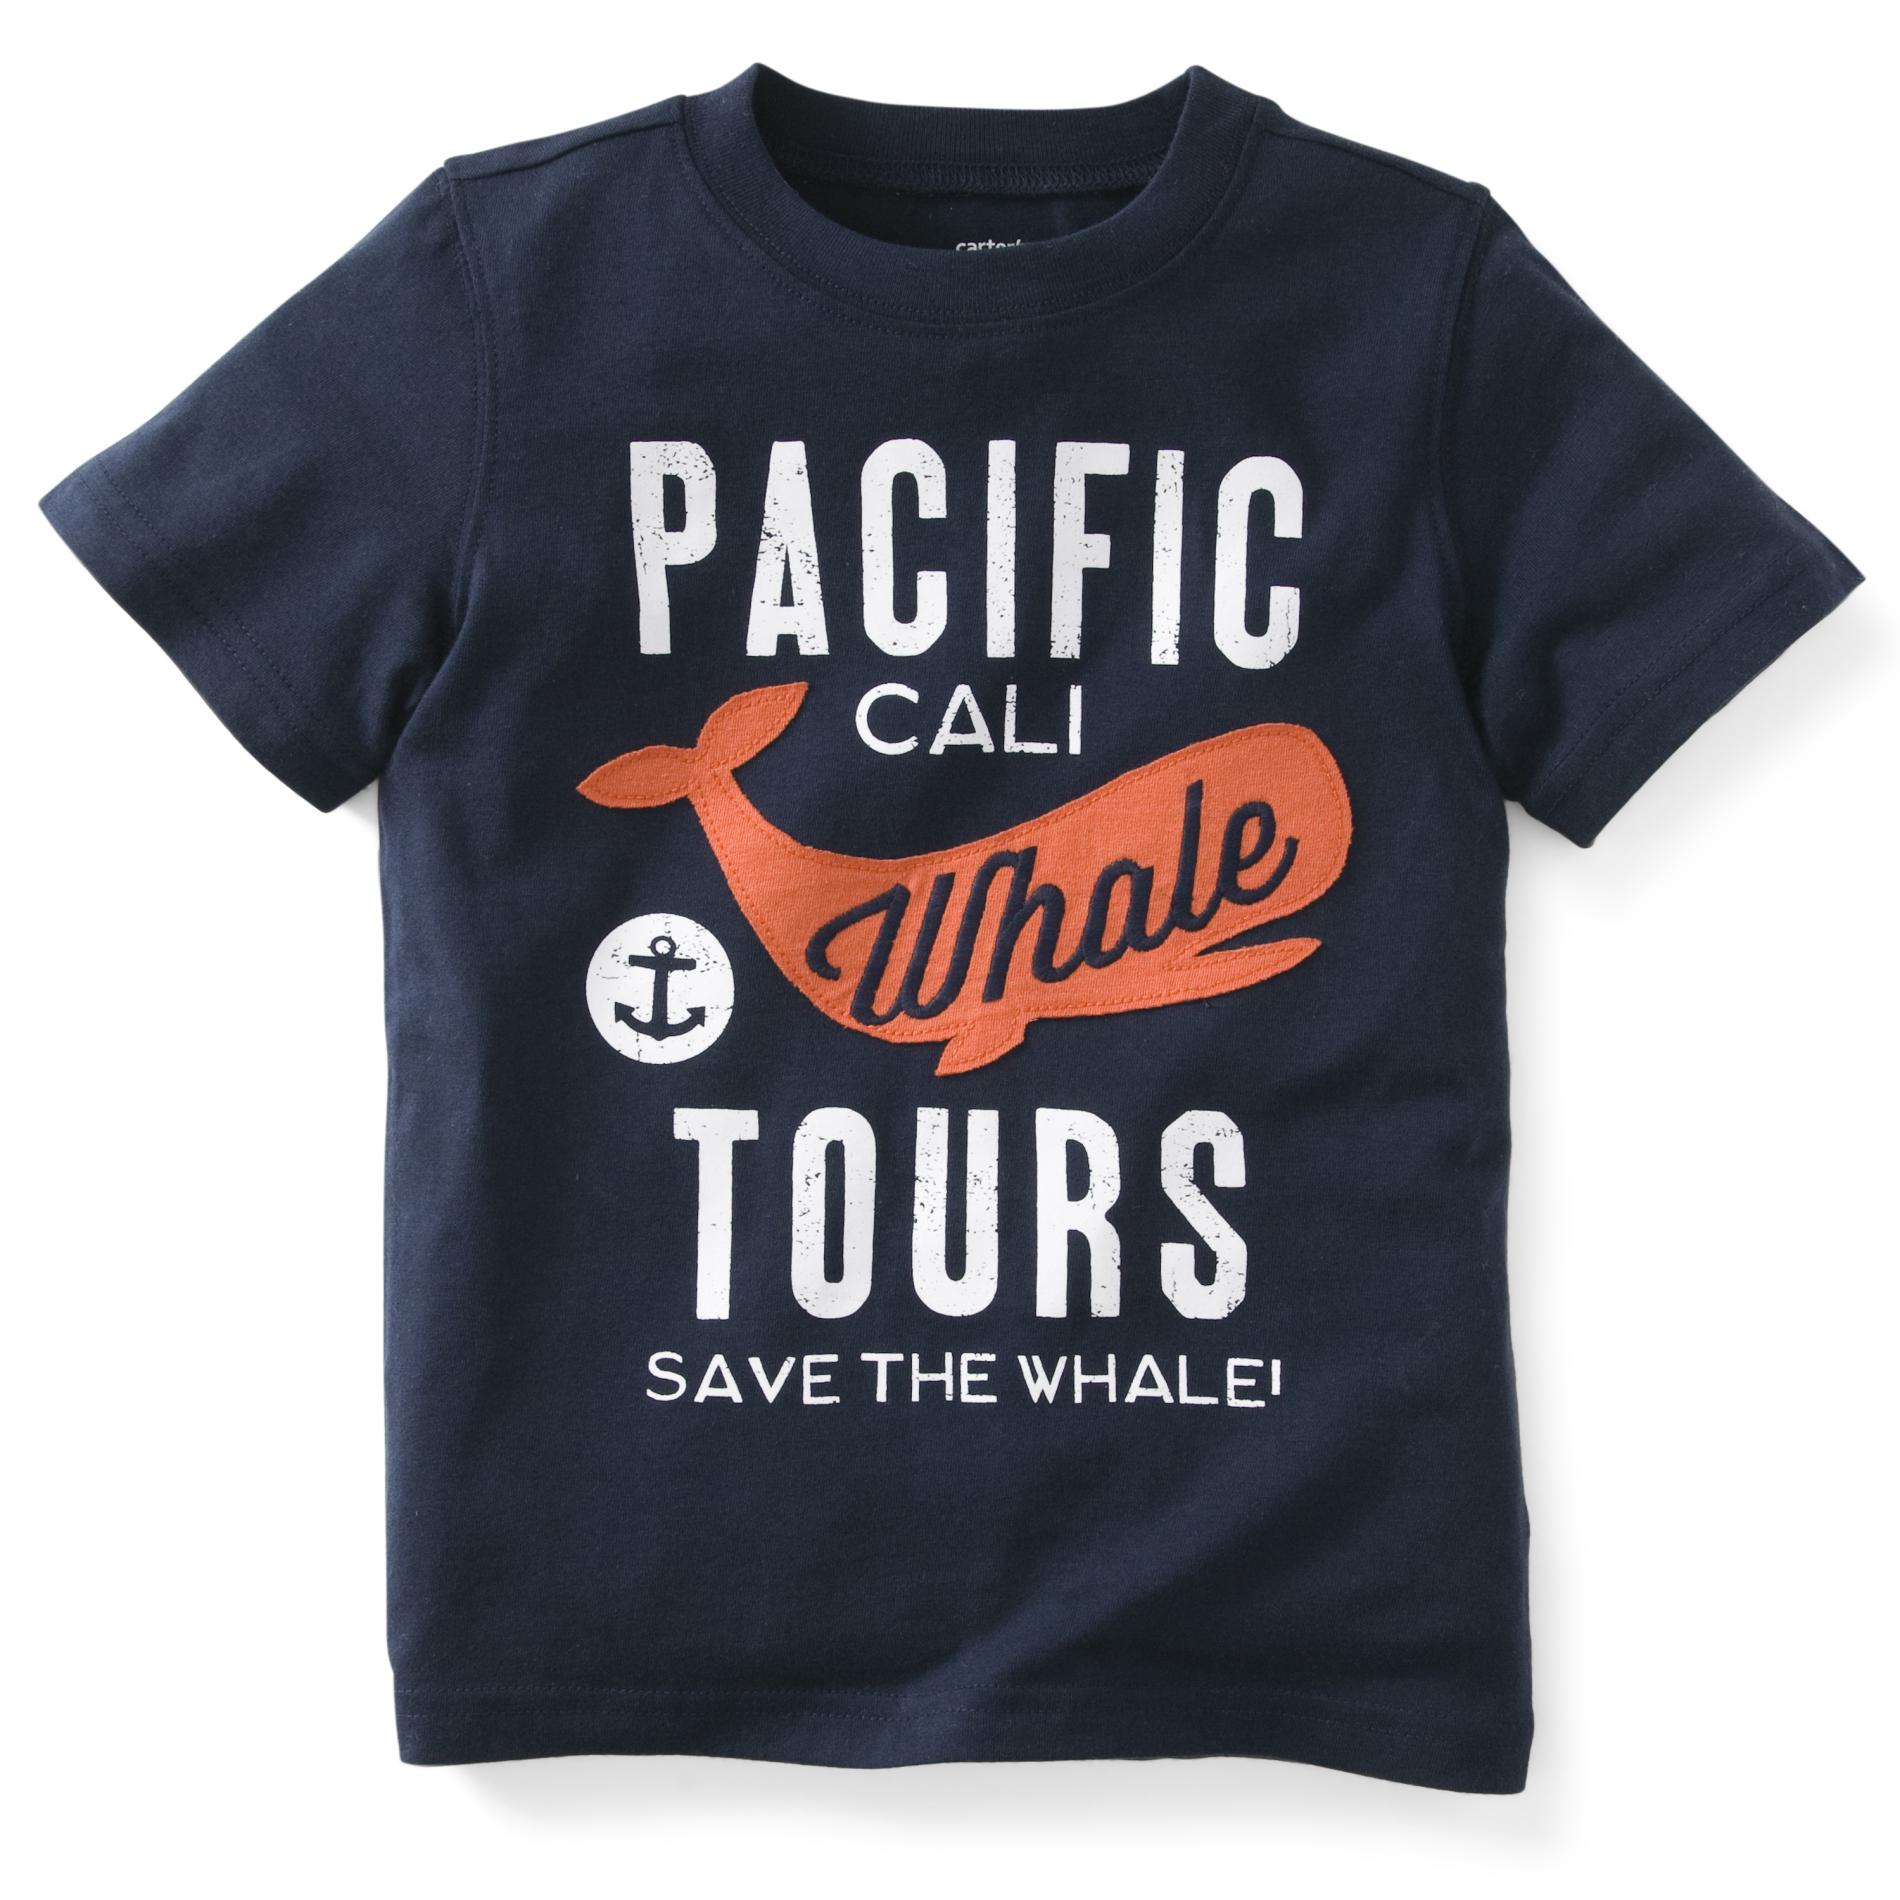 Carter's Boy's Graphic T-Shirt - Pacific Whale Tours